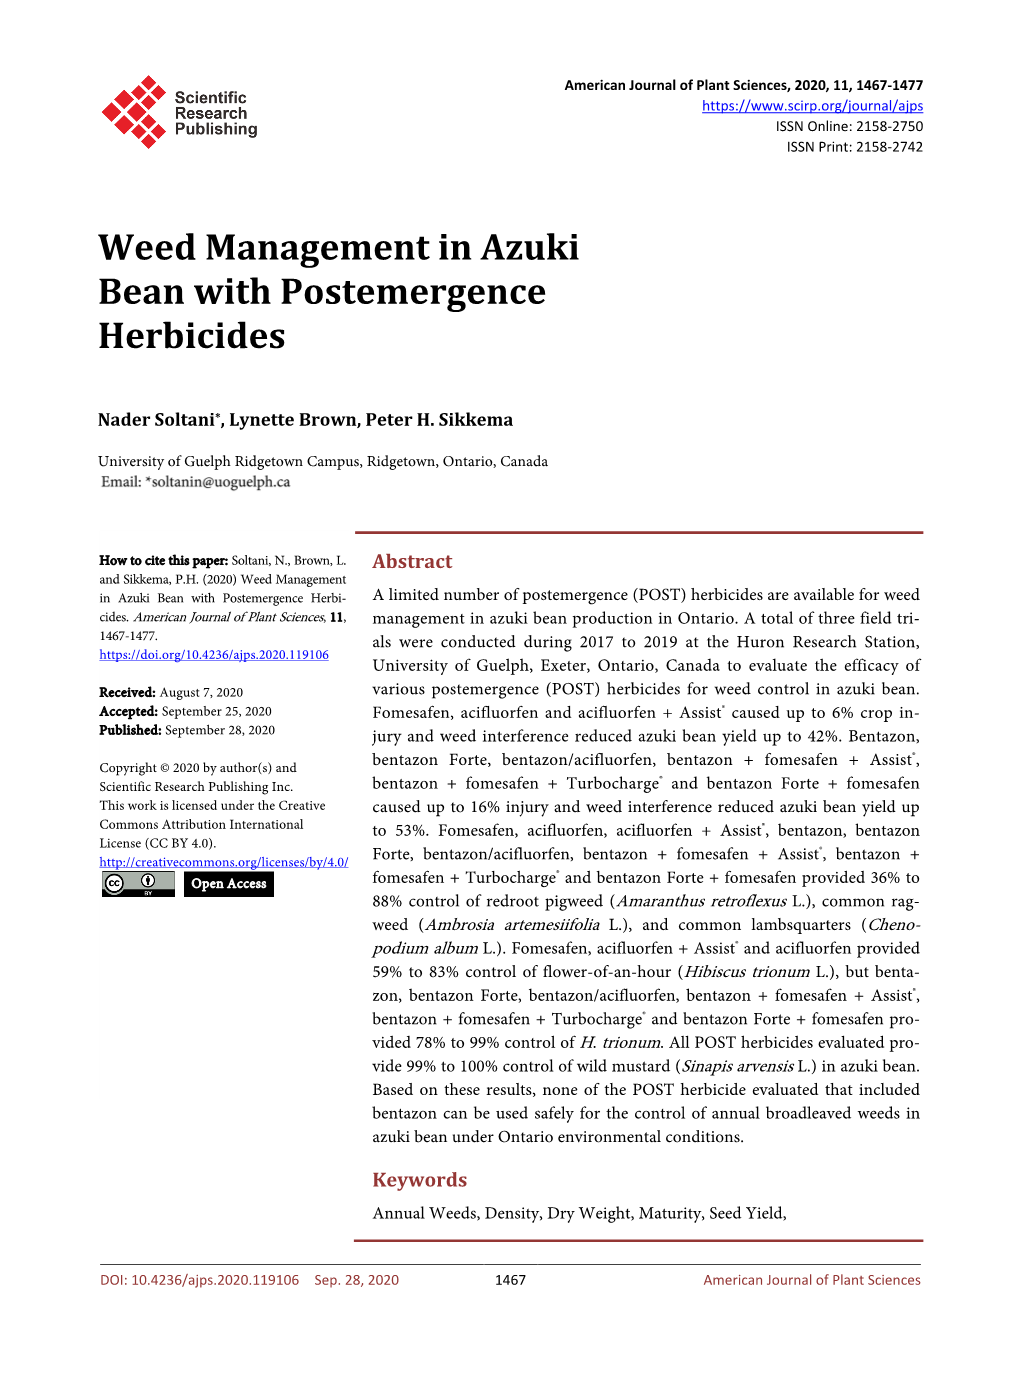 Weed Management in Azuki Bean with Postemergence Herbicides